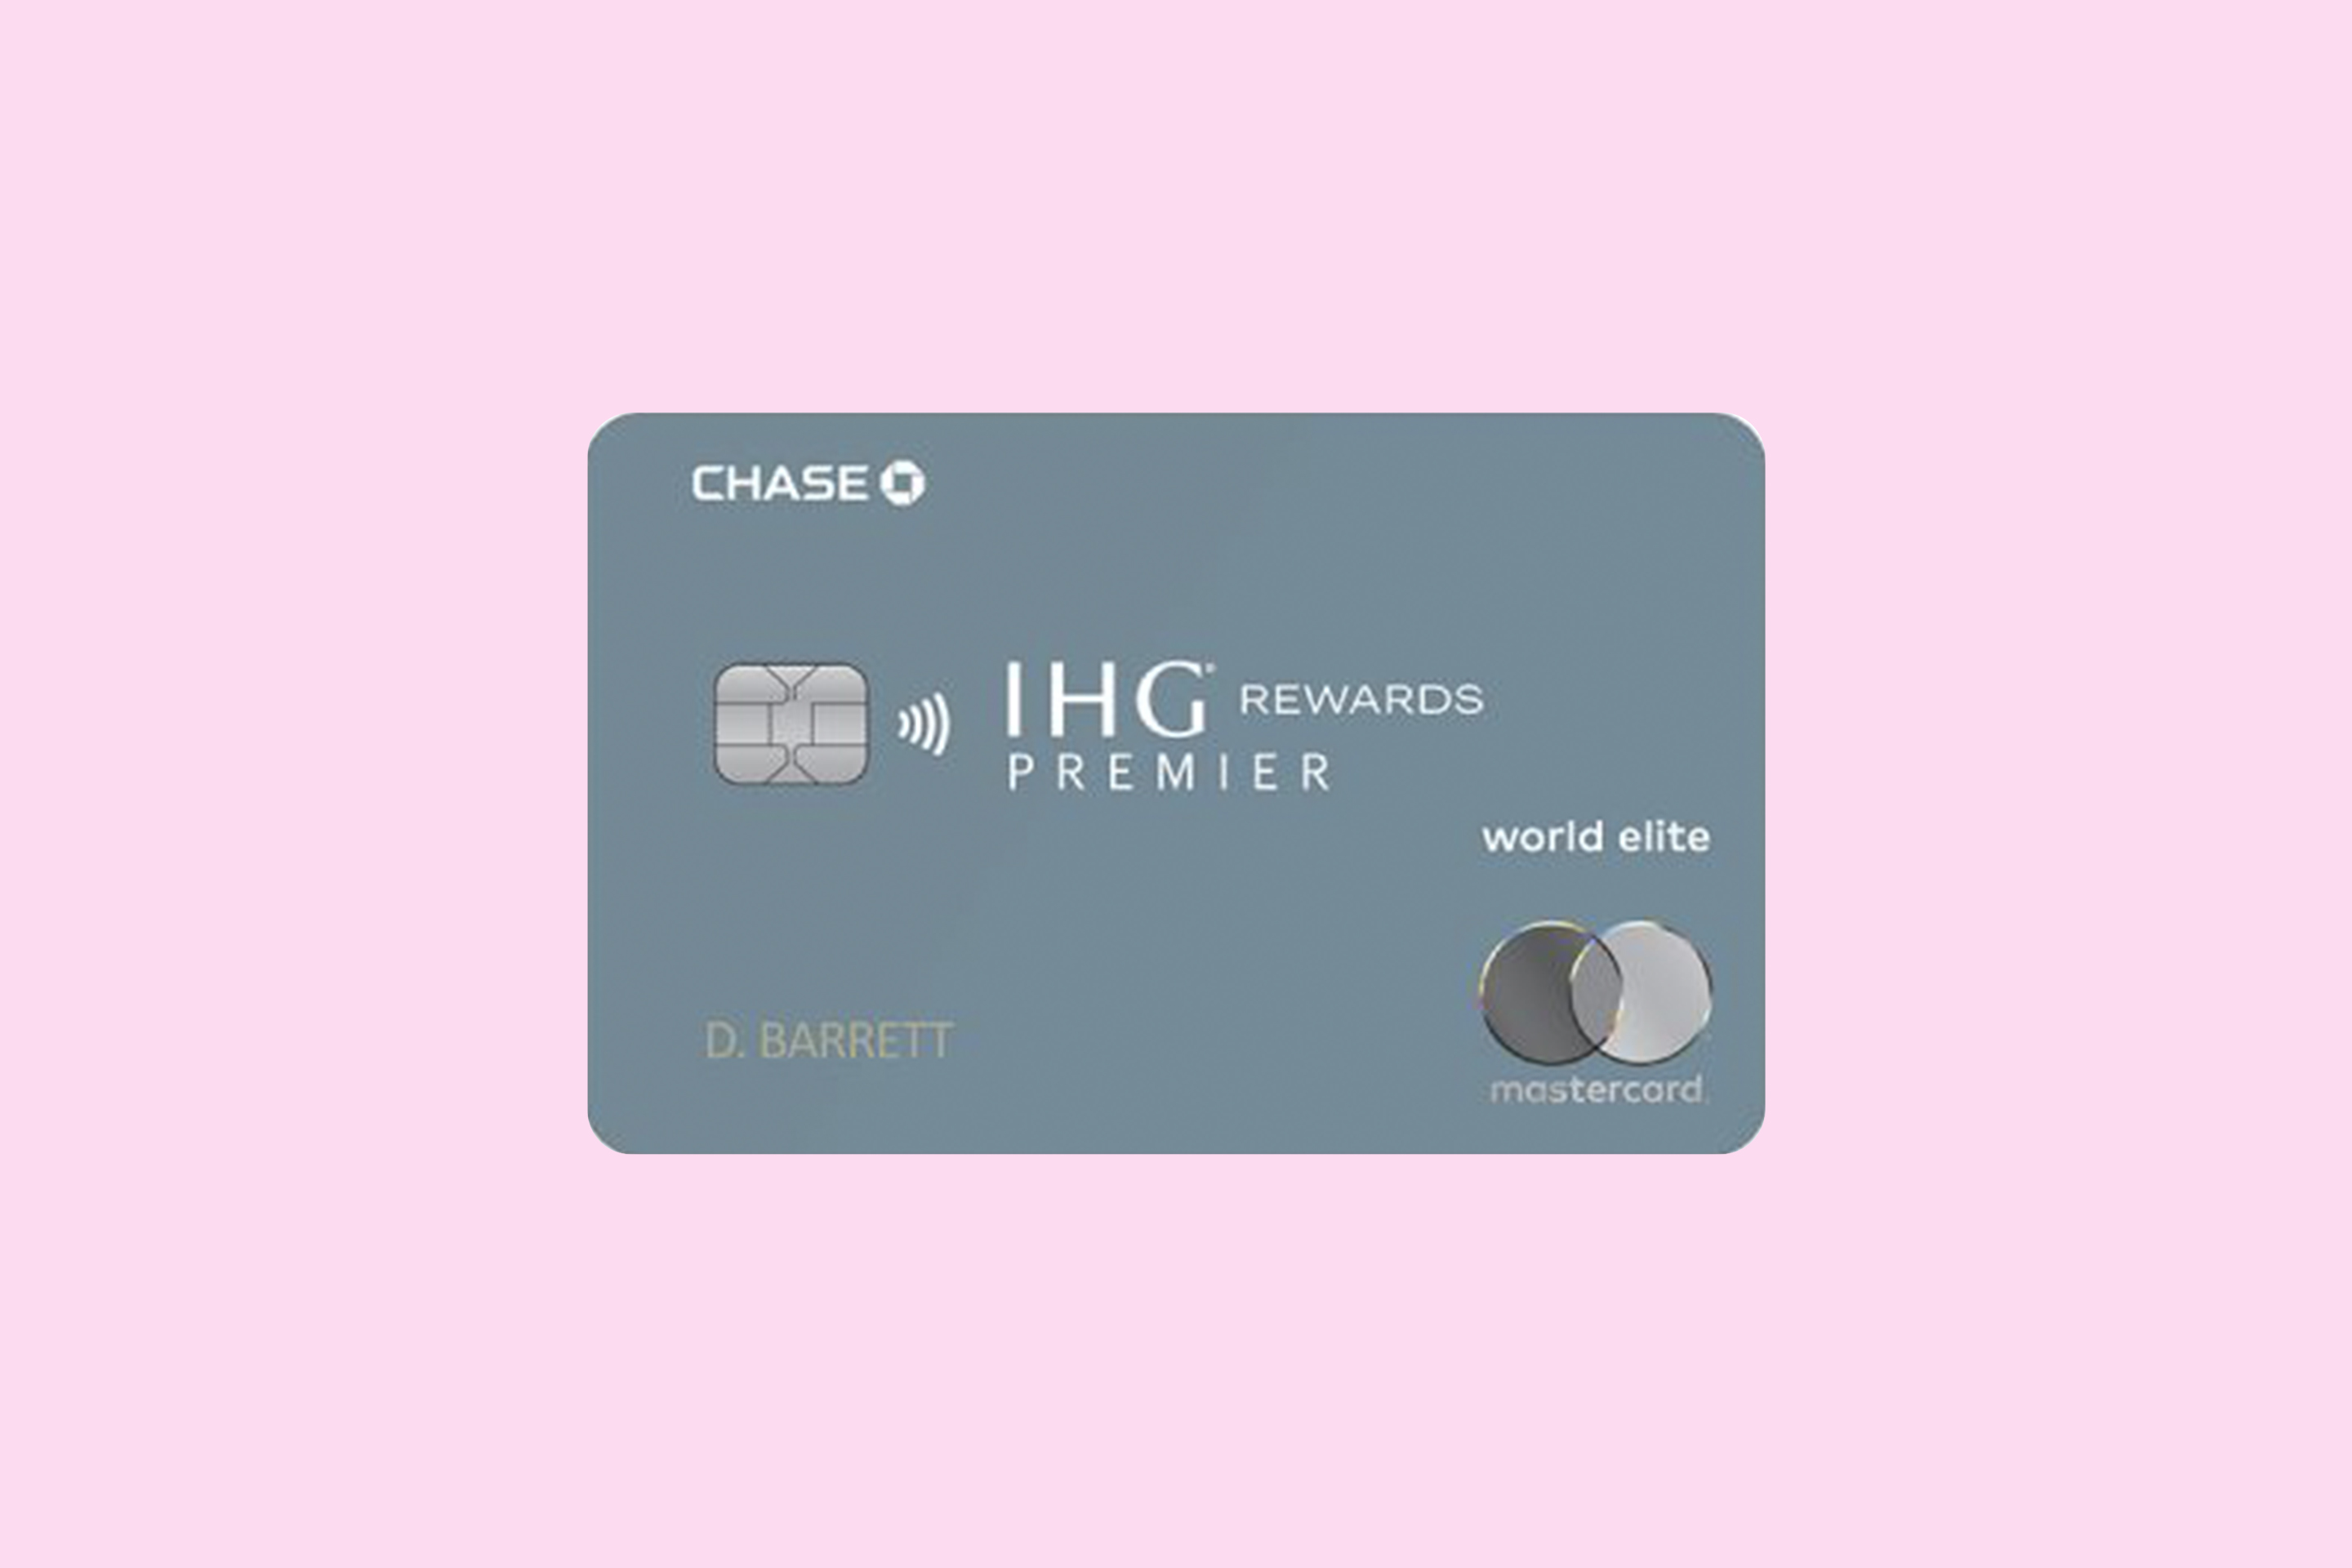 IHG Rewards Premier Credit Card by Chase